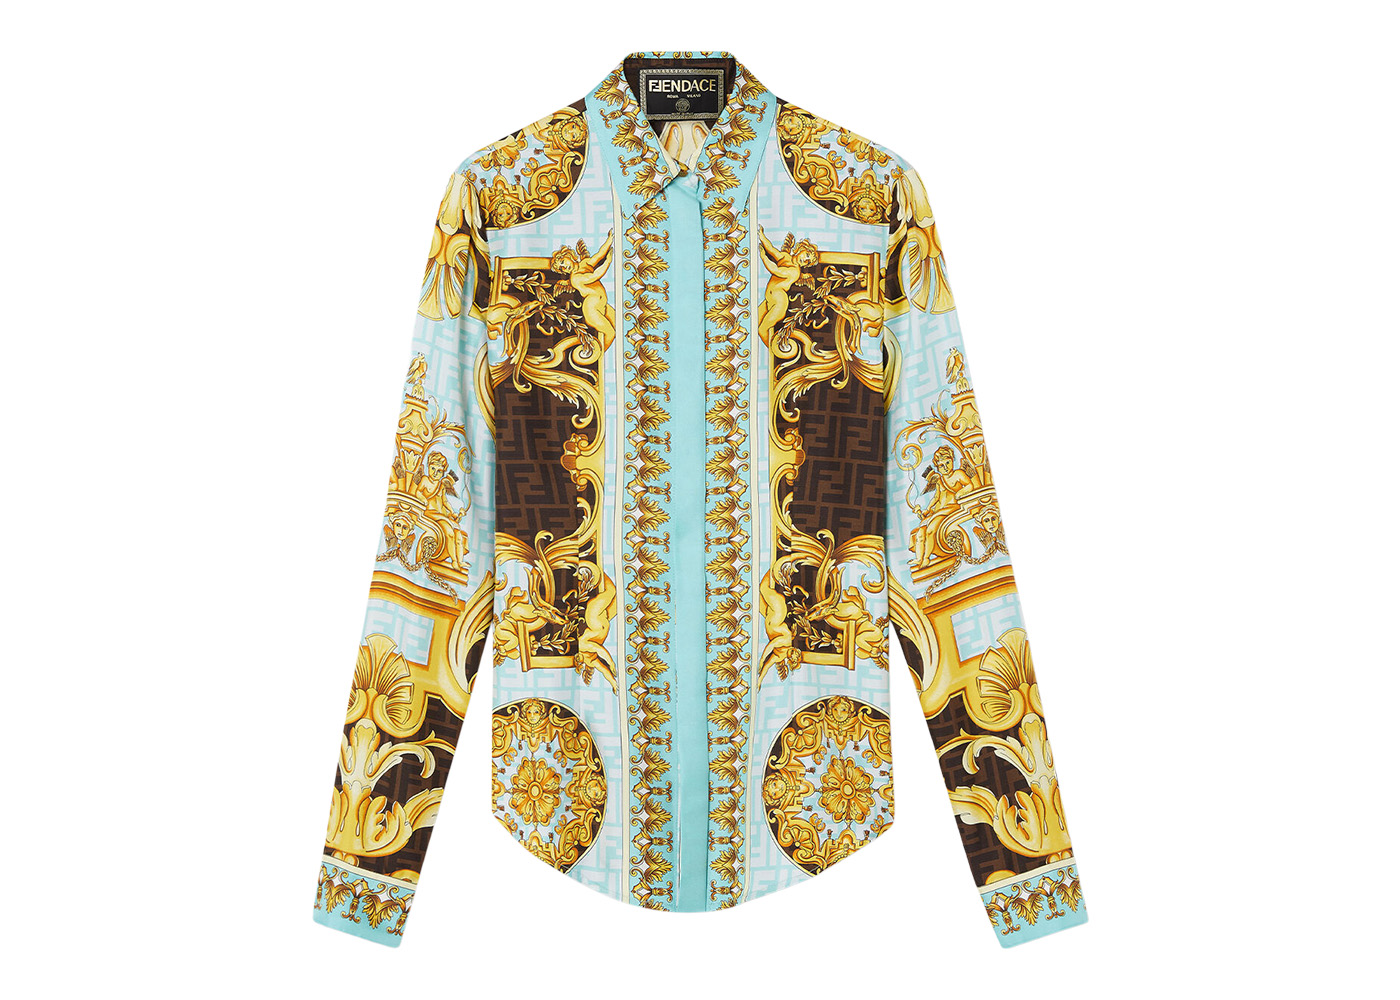 Fendi Fendace Baroque Silk Shirt Gold/Blue